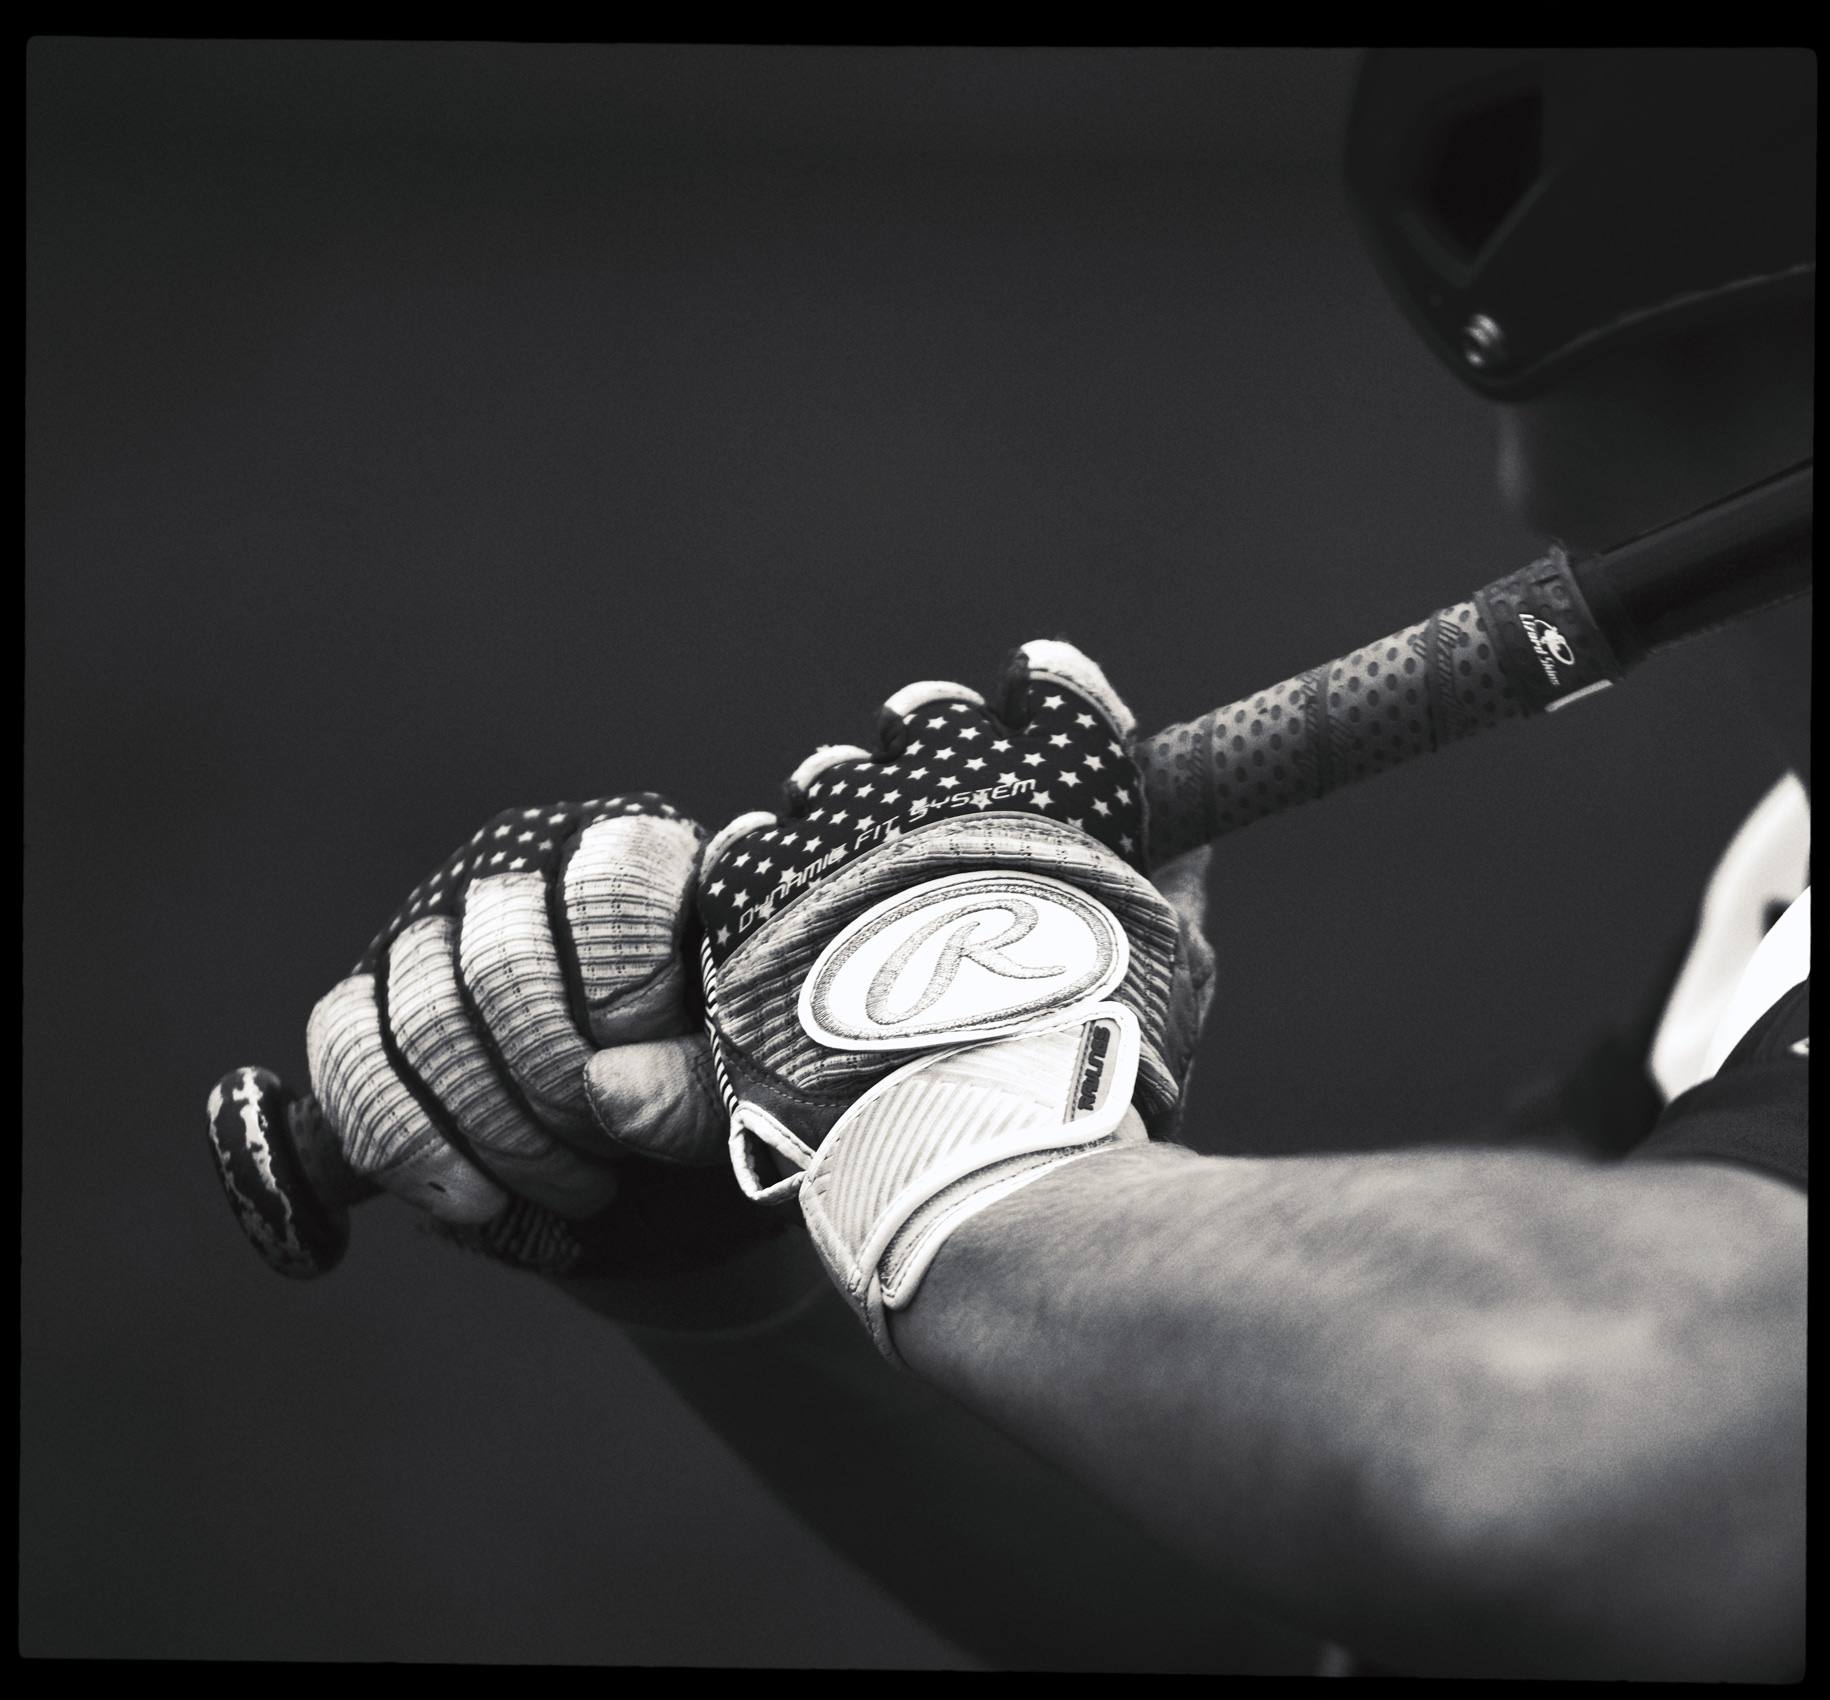 Detail of a baseball player holding a baseball bat